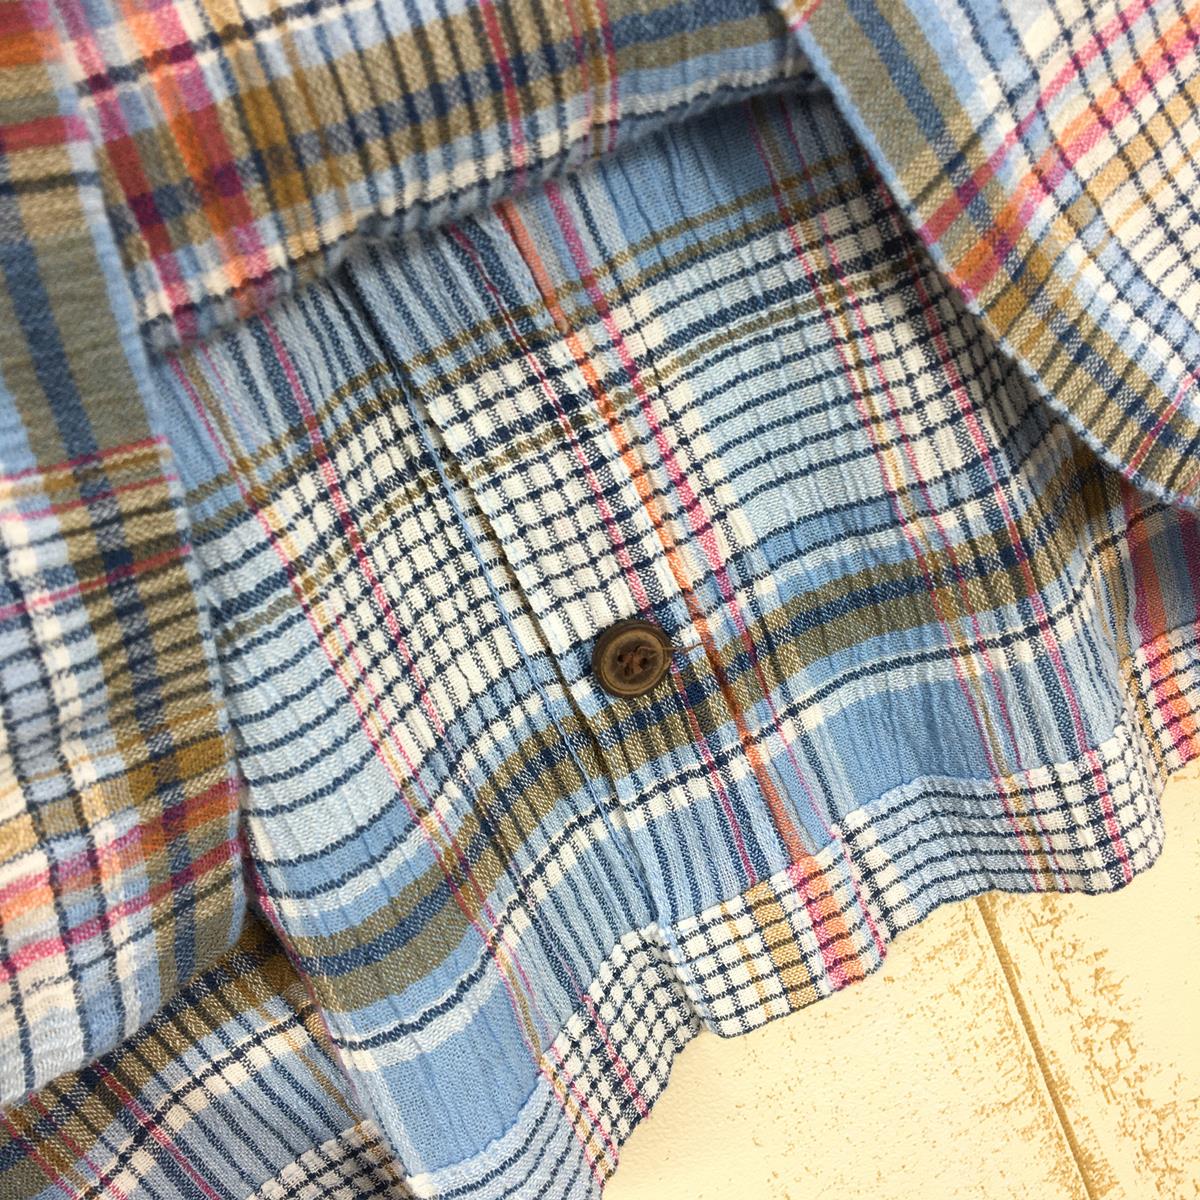 【MEN's S】 パタゴニア エーシー シャツ AC Shirt オーガニックコットン 速乾 名作 生産終了モデル 入手困難 PATAGONIA 52921 SASB ブルー系